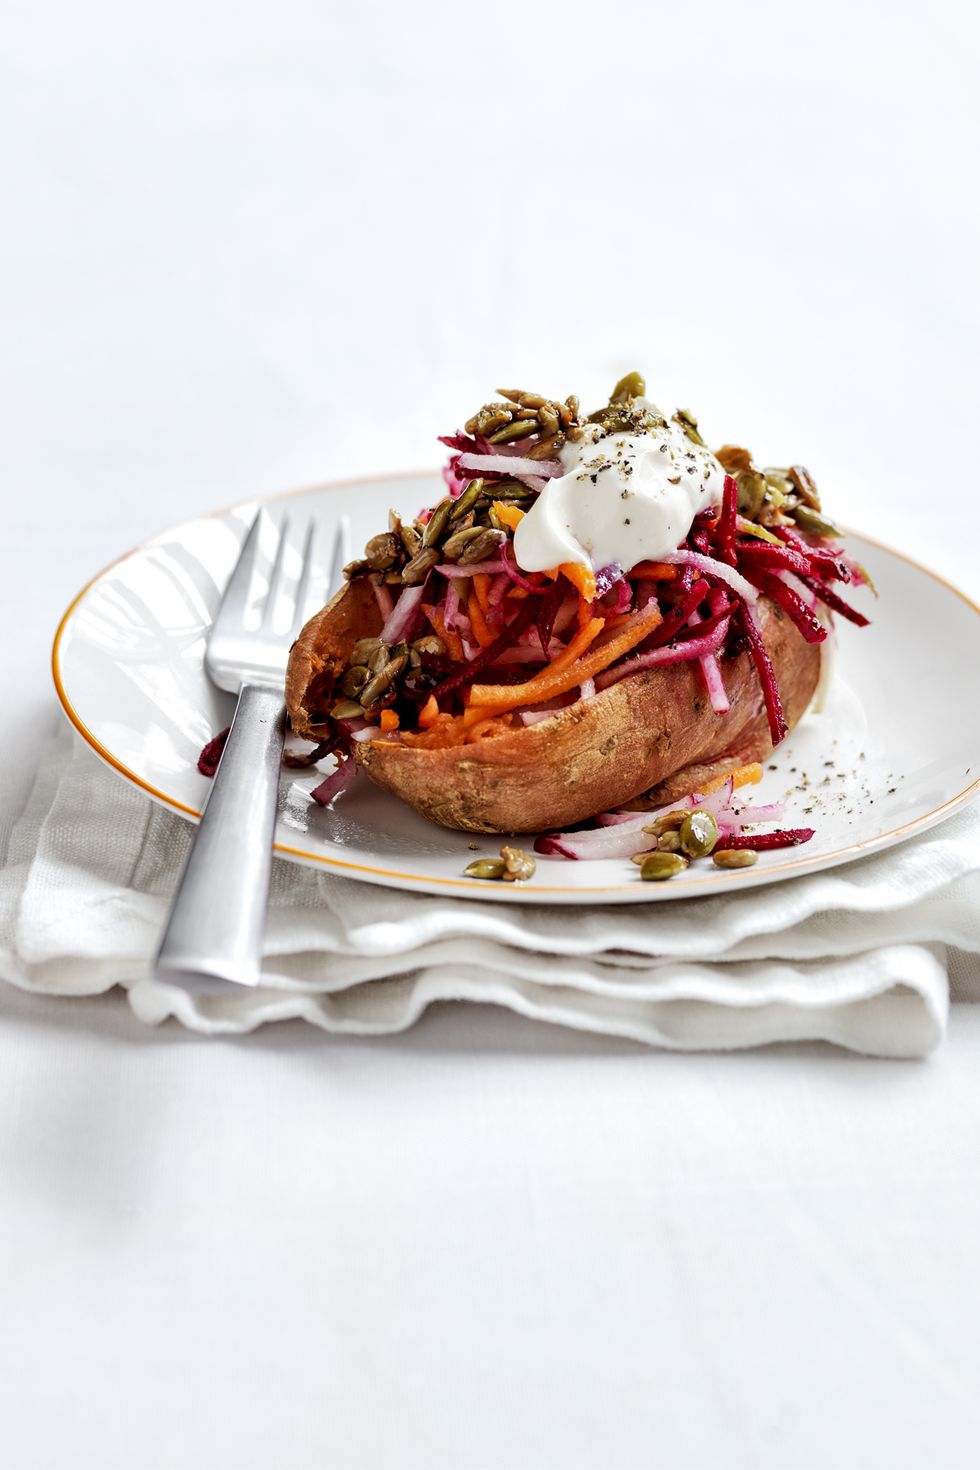 heart healthy recipes sweet potatoes with shredded salad